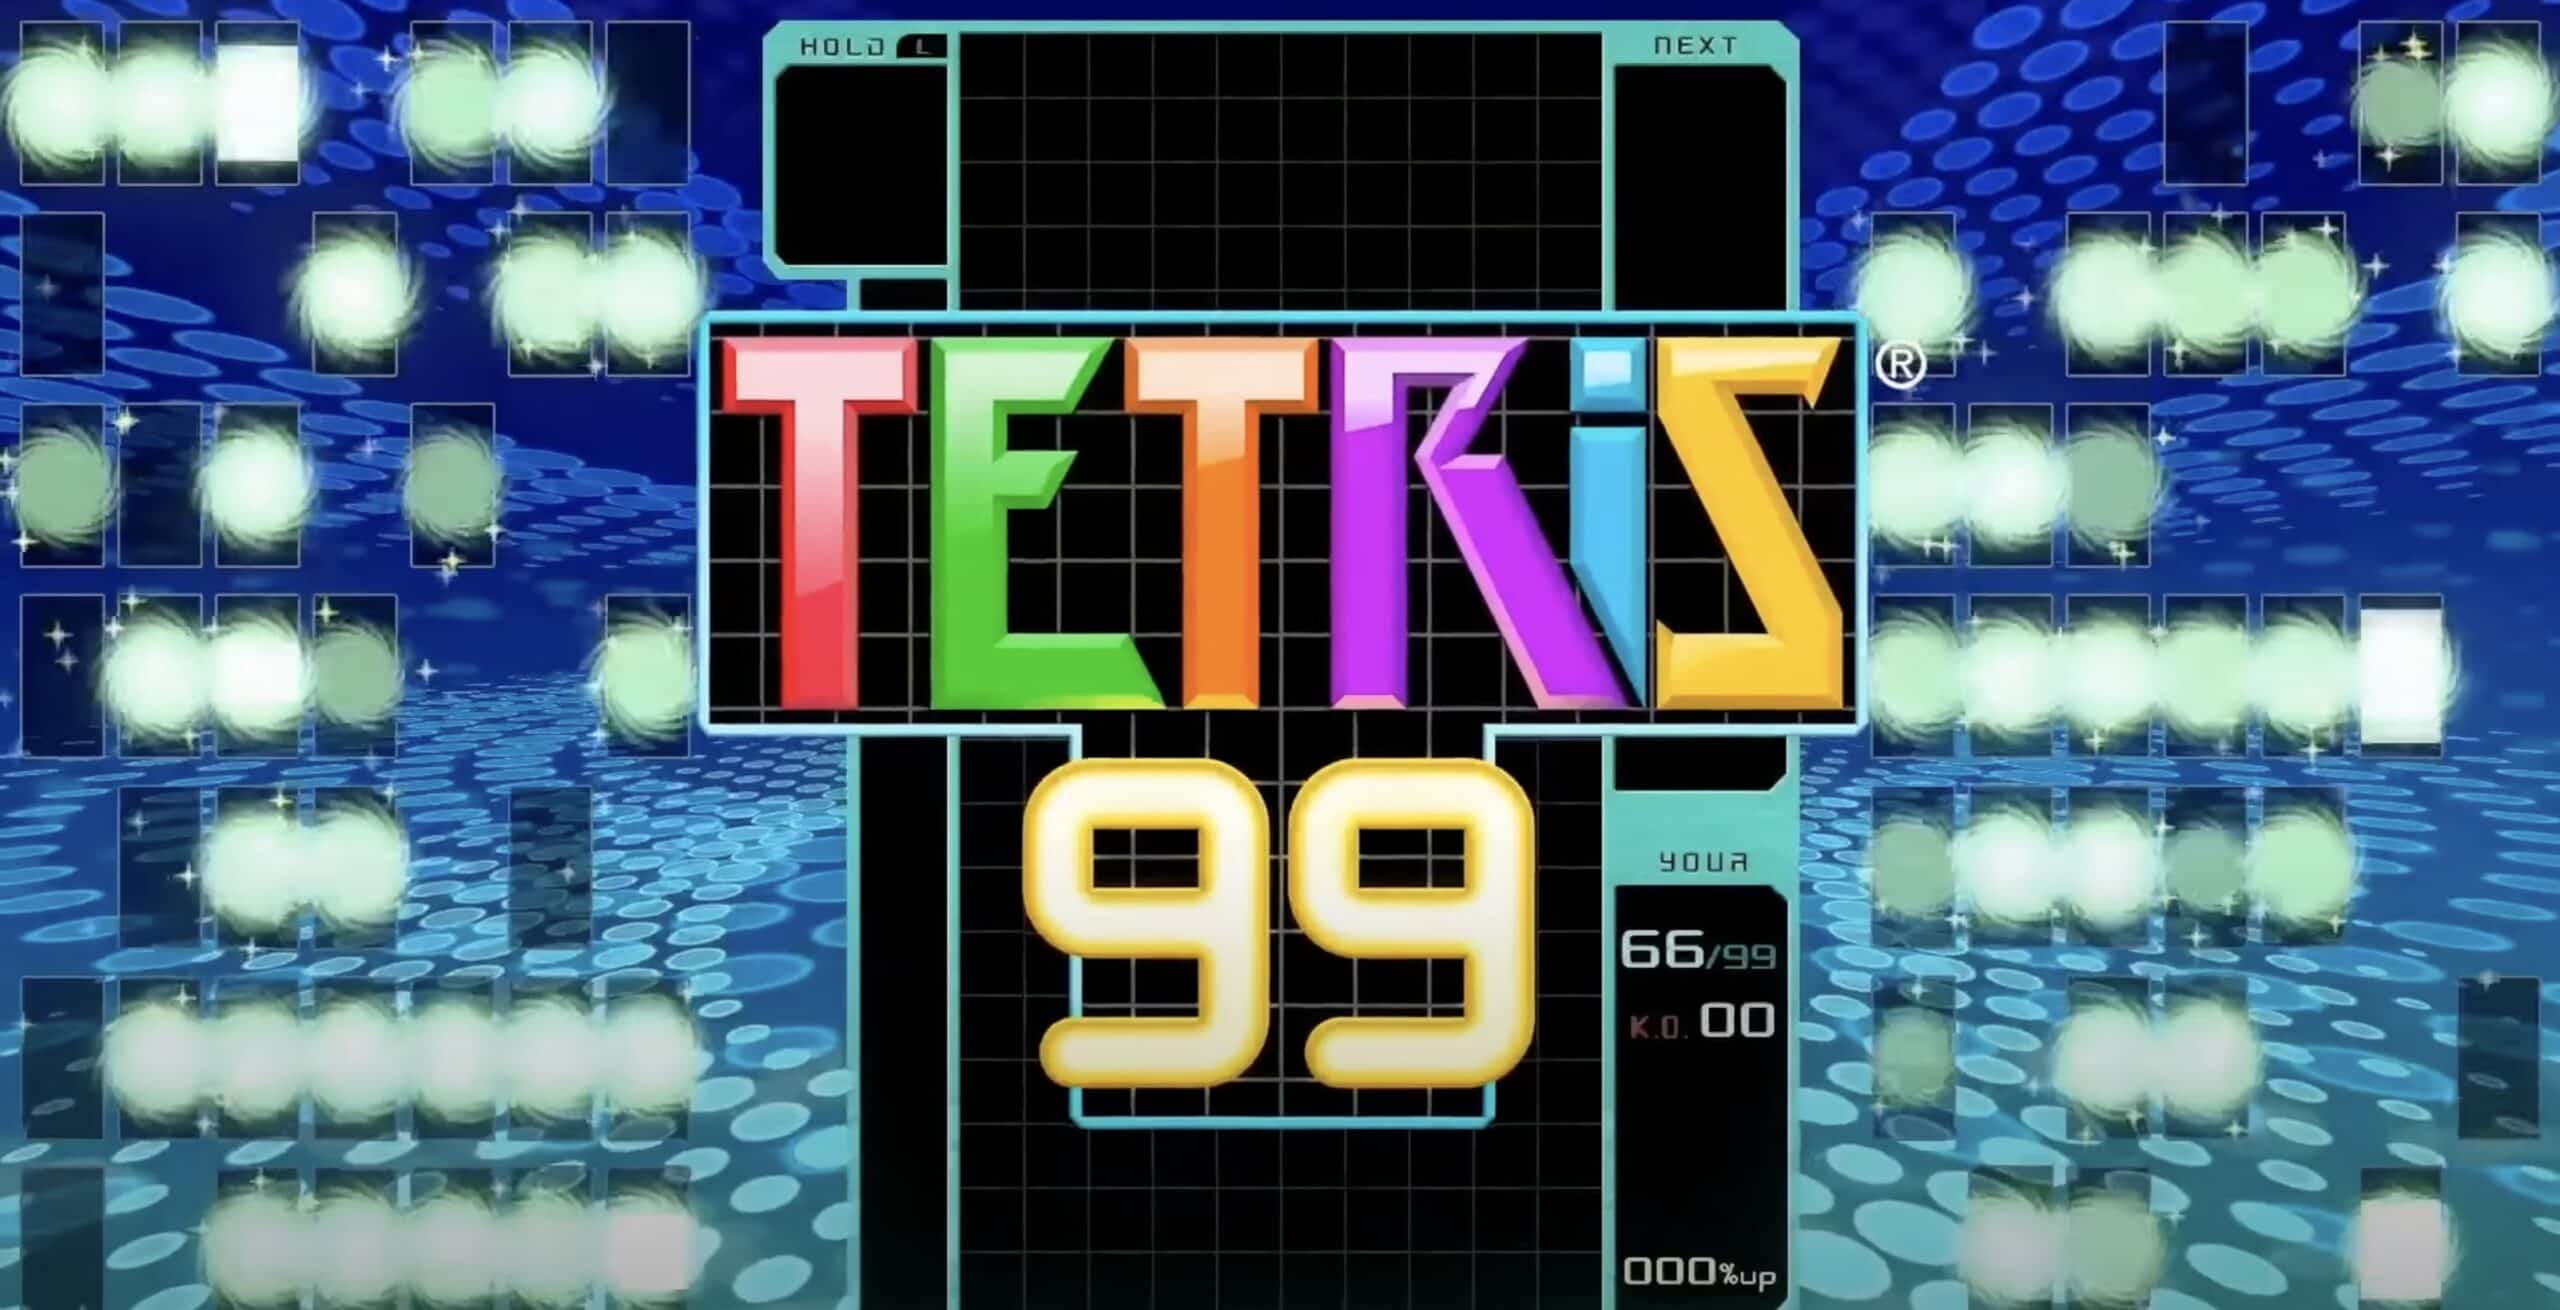 Tetris 99 logo as seen in the launch trailer